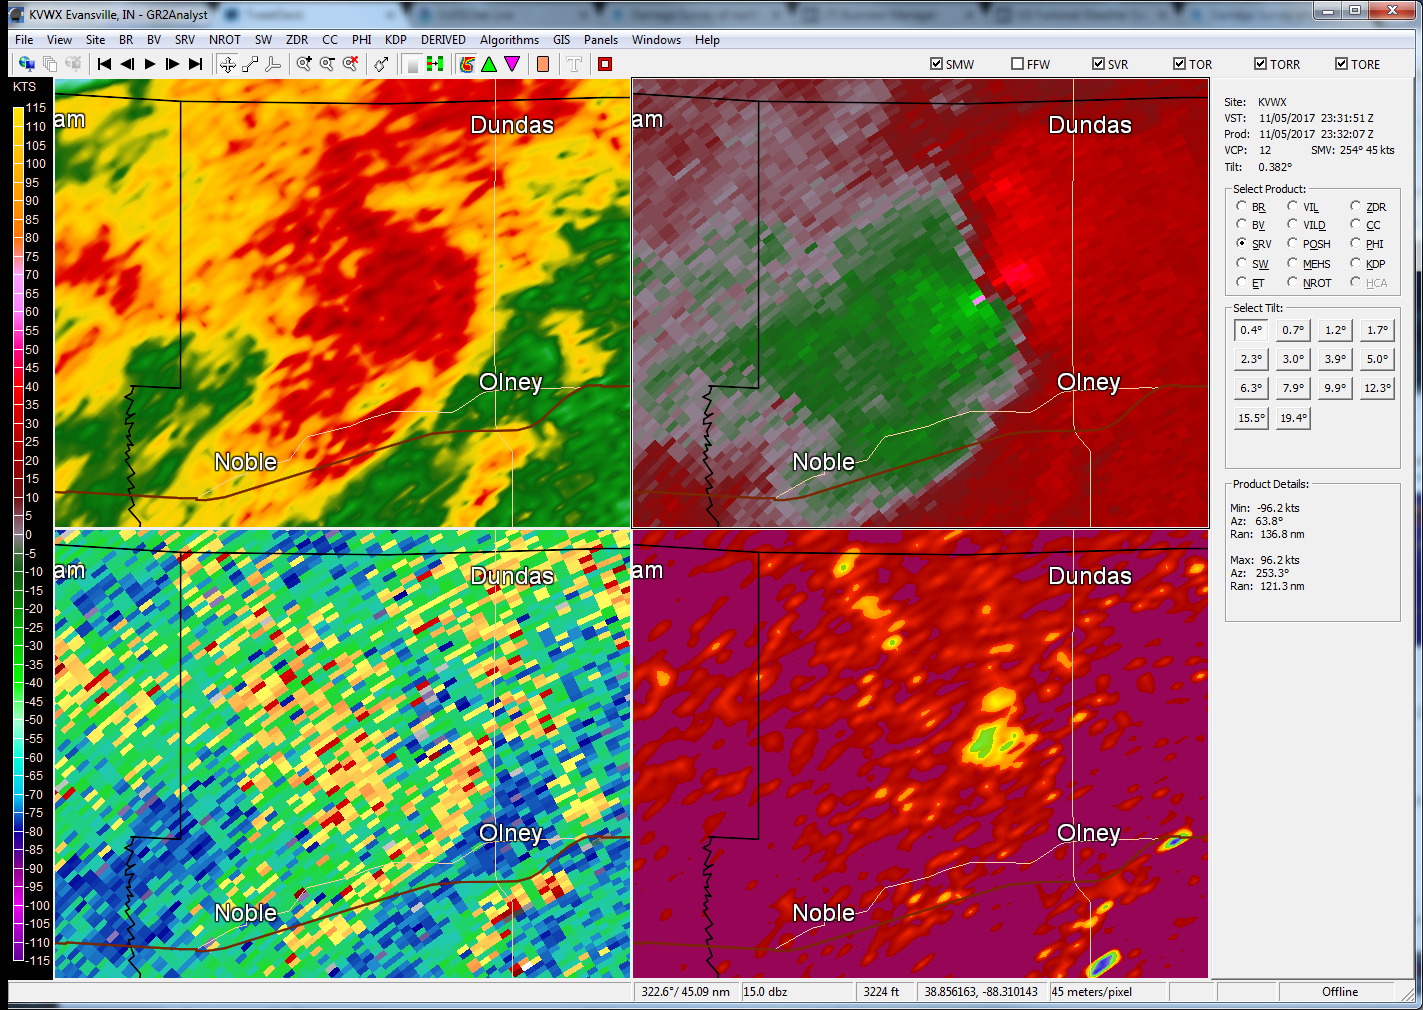 Evansville radar image from 5:31 pm